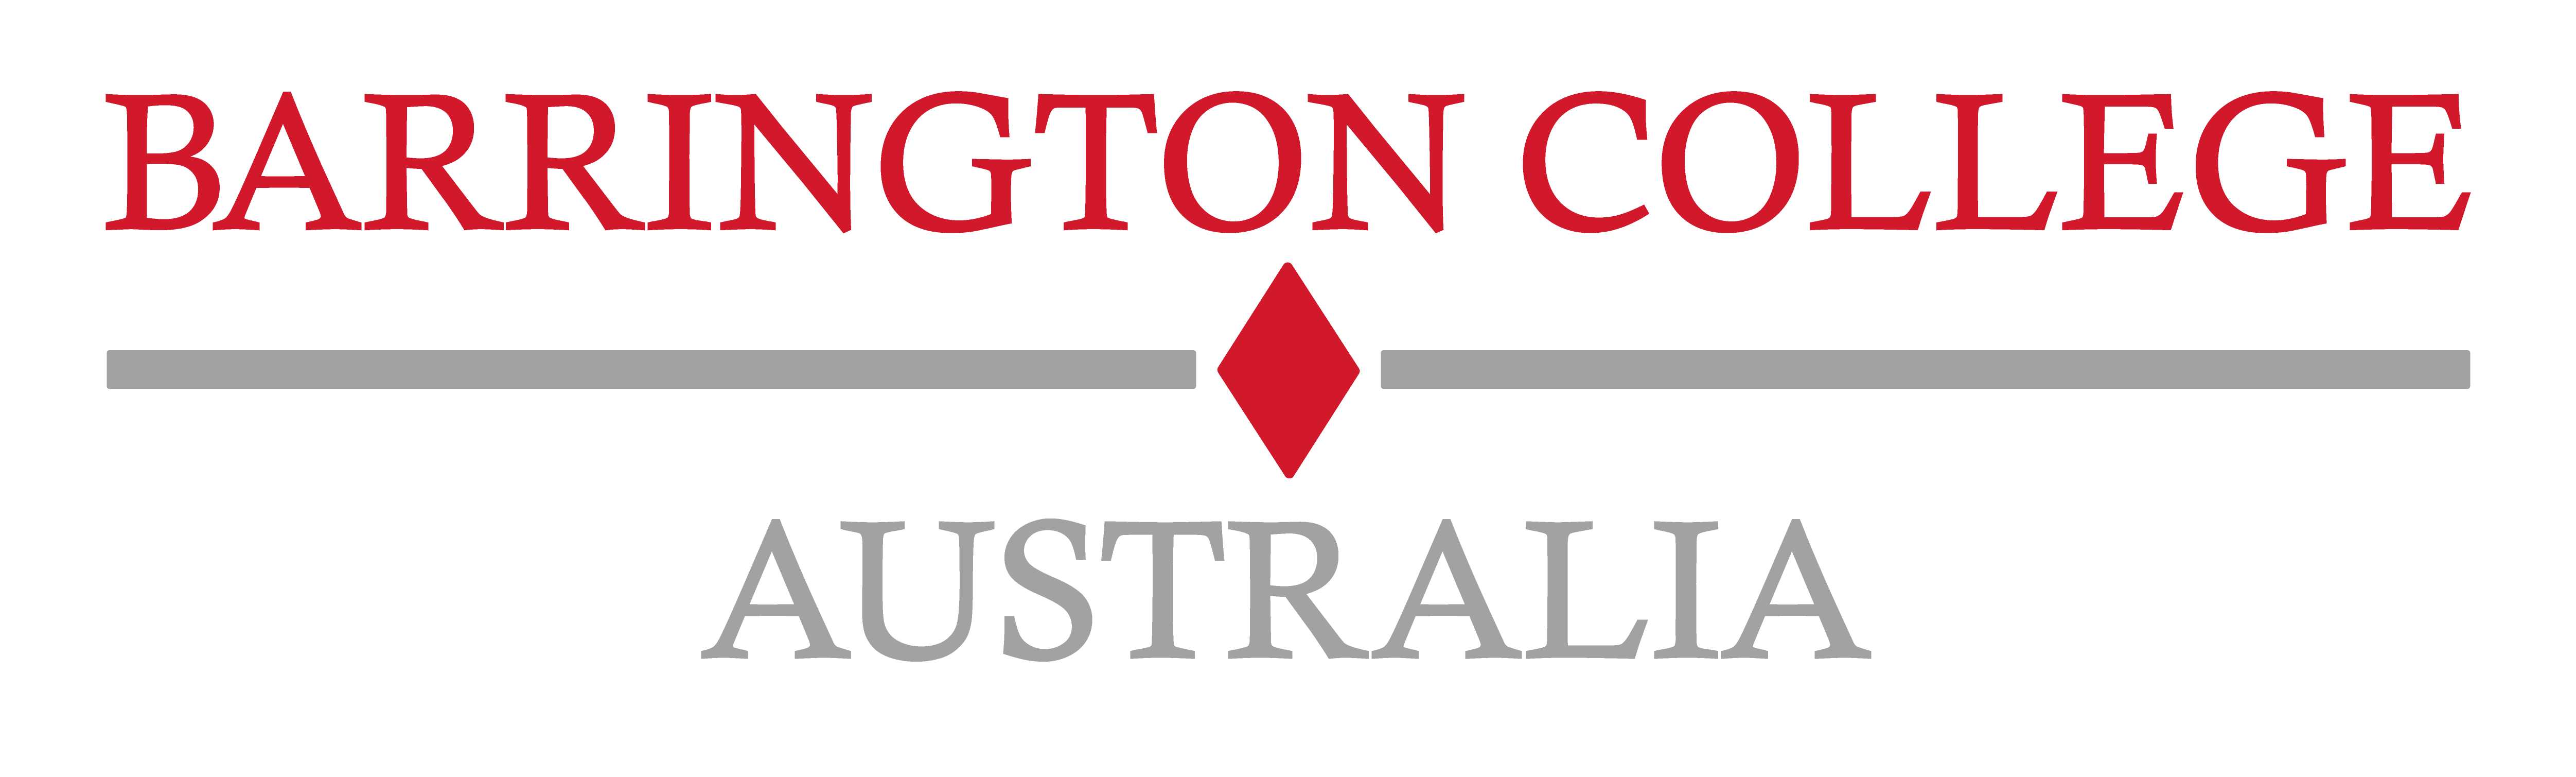 Barrington College Australia | Business, Hospitality, Funded Training Courses